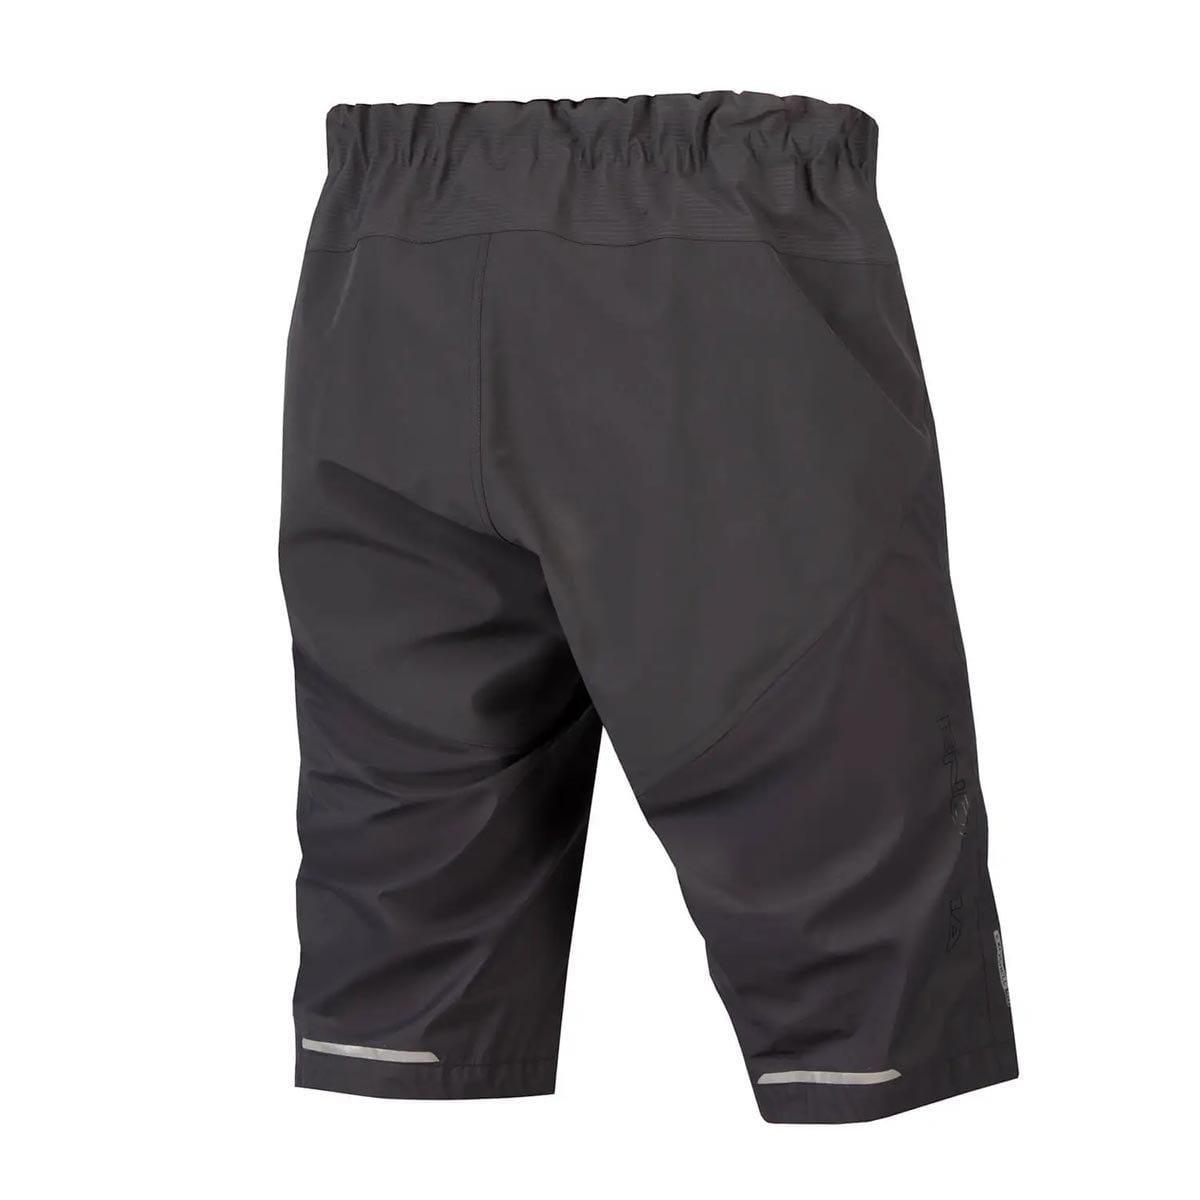 Endura Men's GV500 Waterproof Short Apparel - Clothing - Men's Shorts - Mountain